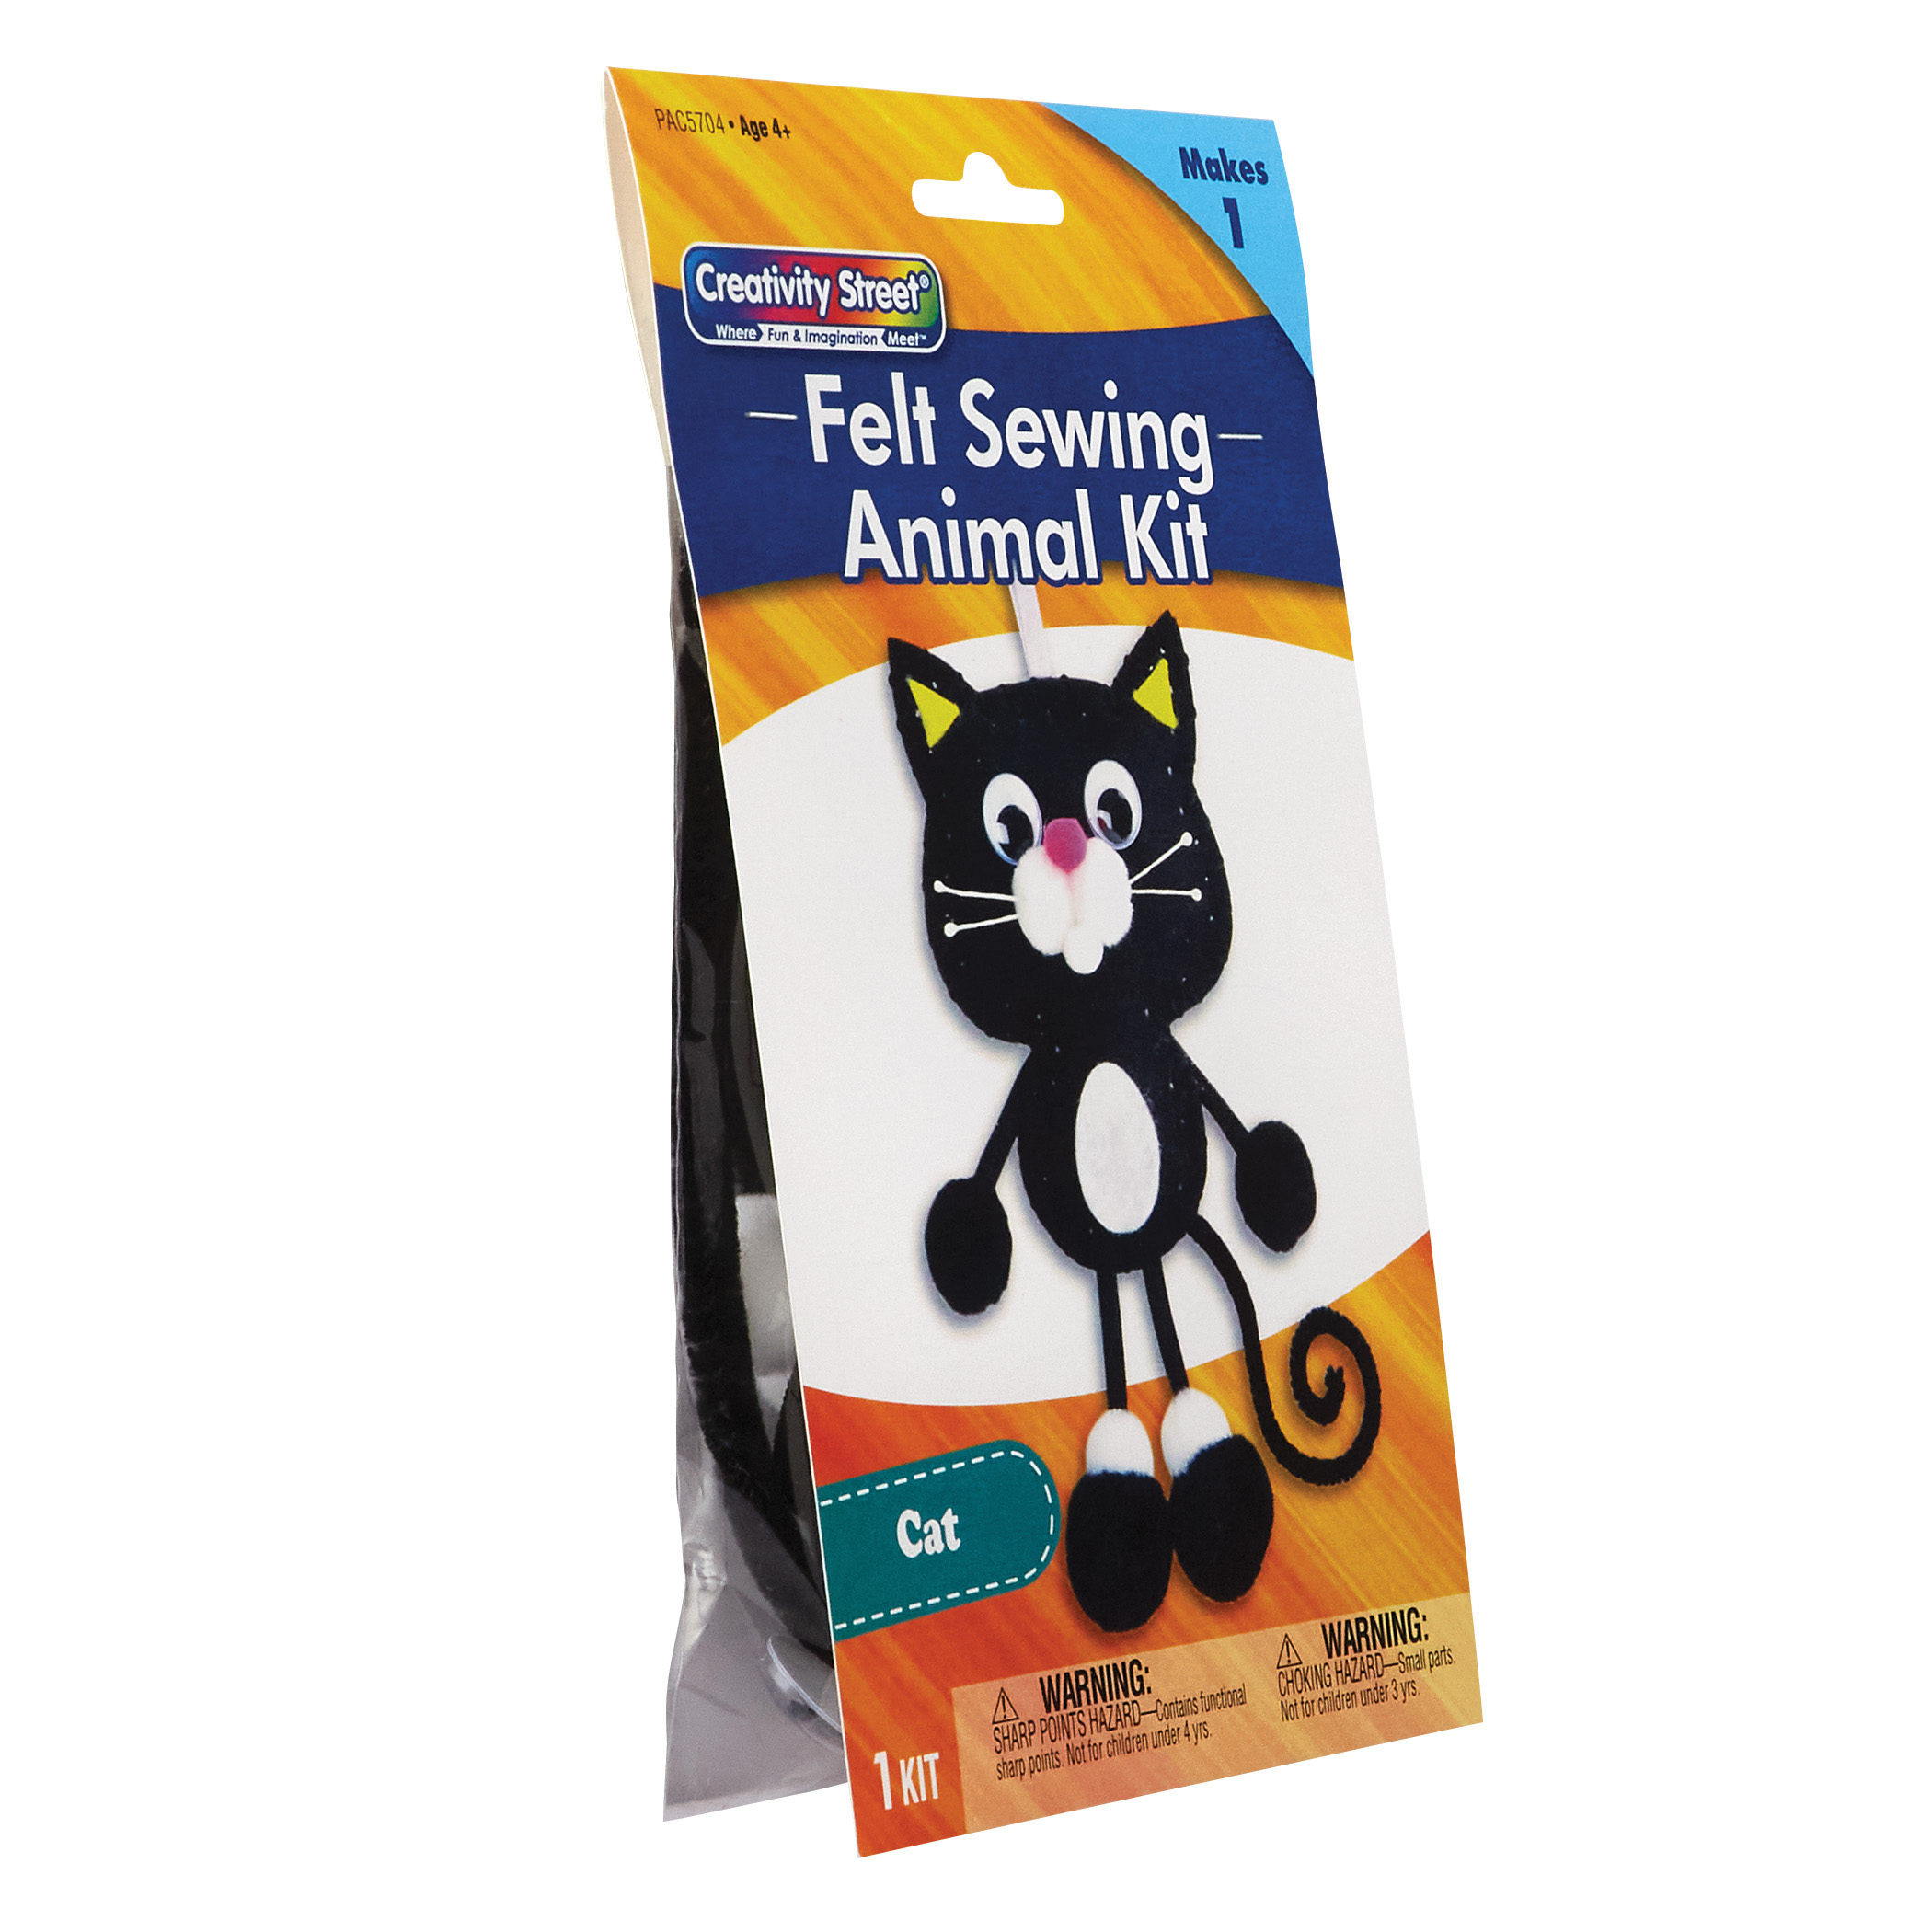 The Teachers' Lounge®  Felt Sewing Animal Kit, Cat, 4 x 10.25 x 1, 6  Kits